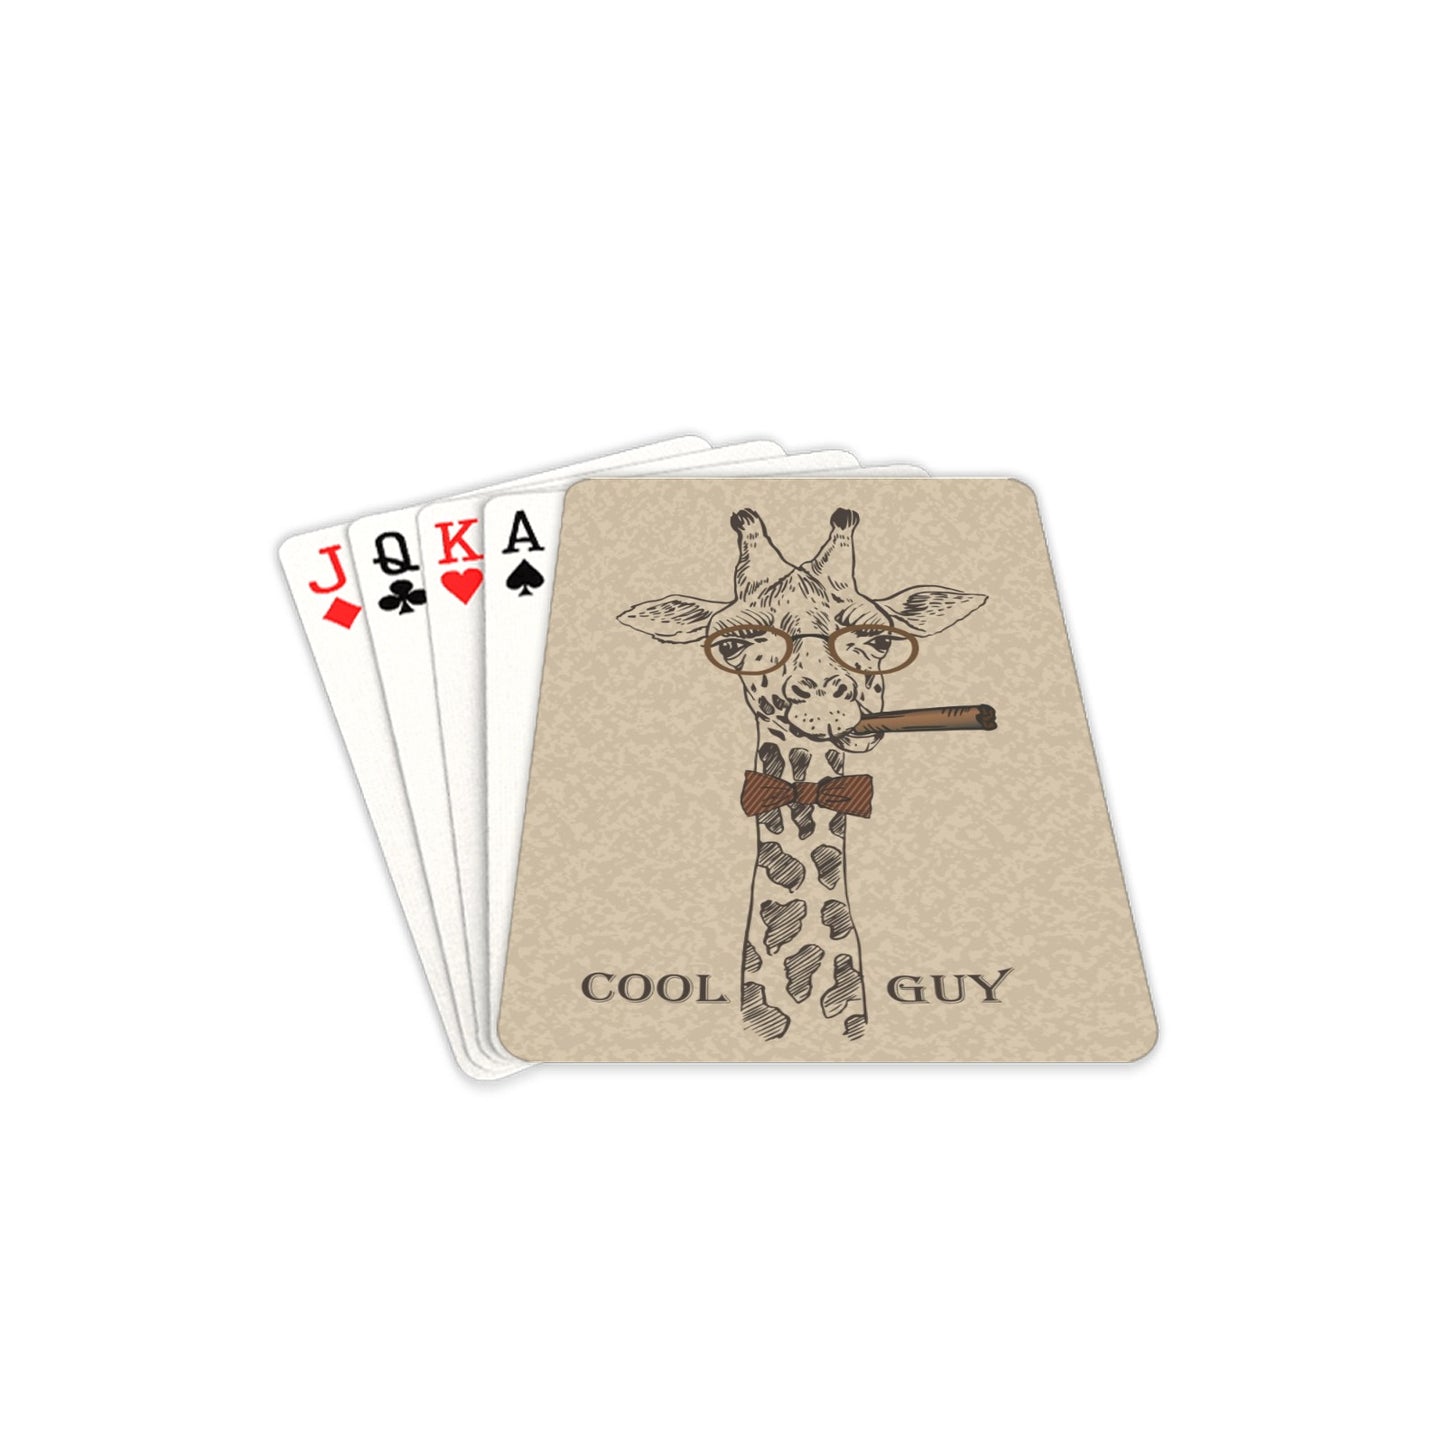 Giraffe, Cool Guy - Playing Cards 2.5"x3.5" Playing Card 2.5"x3.5"